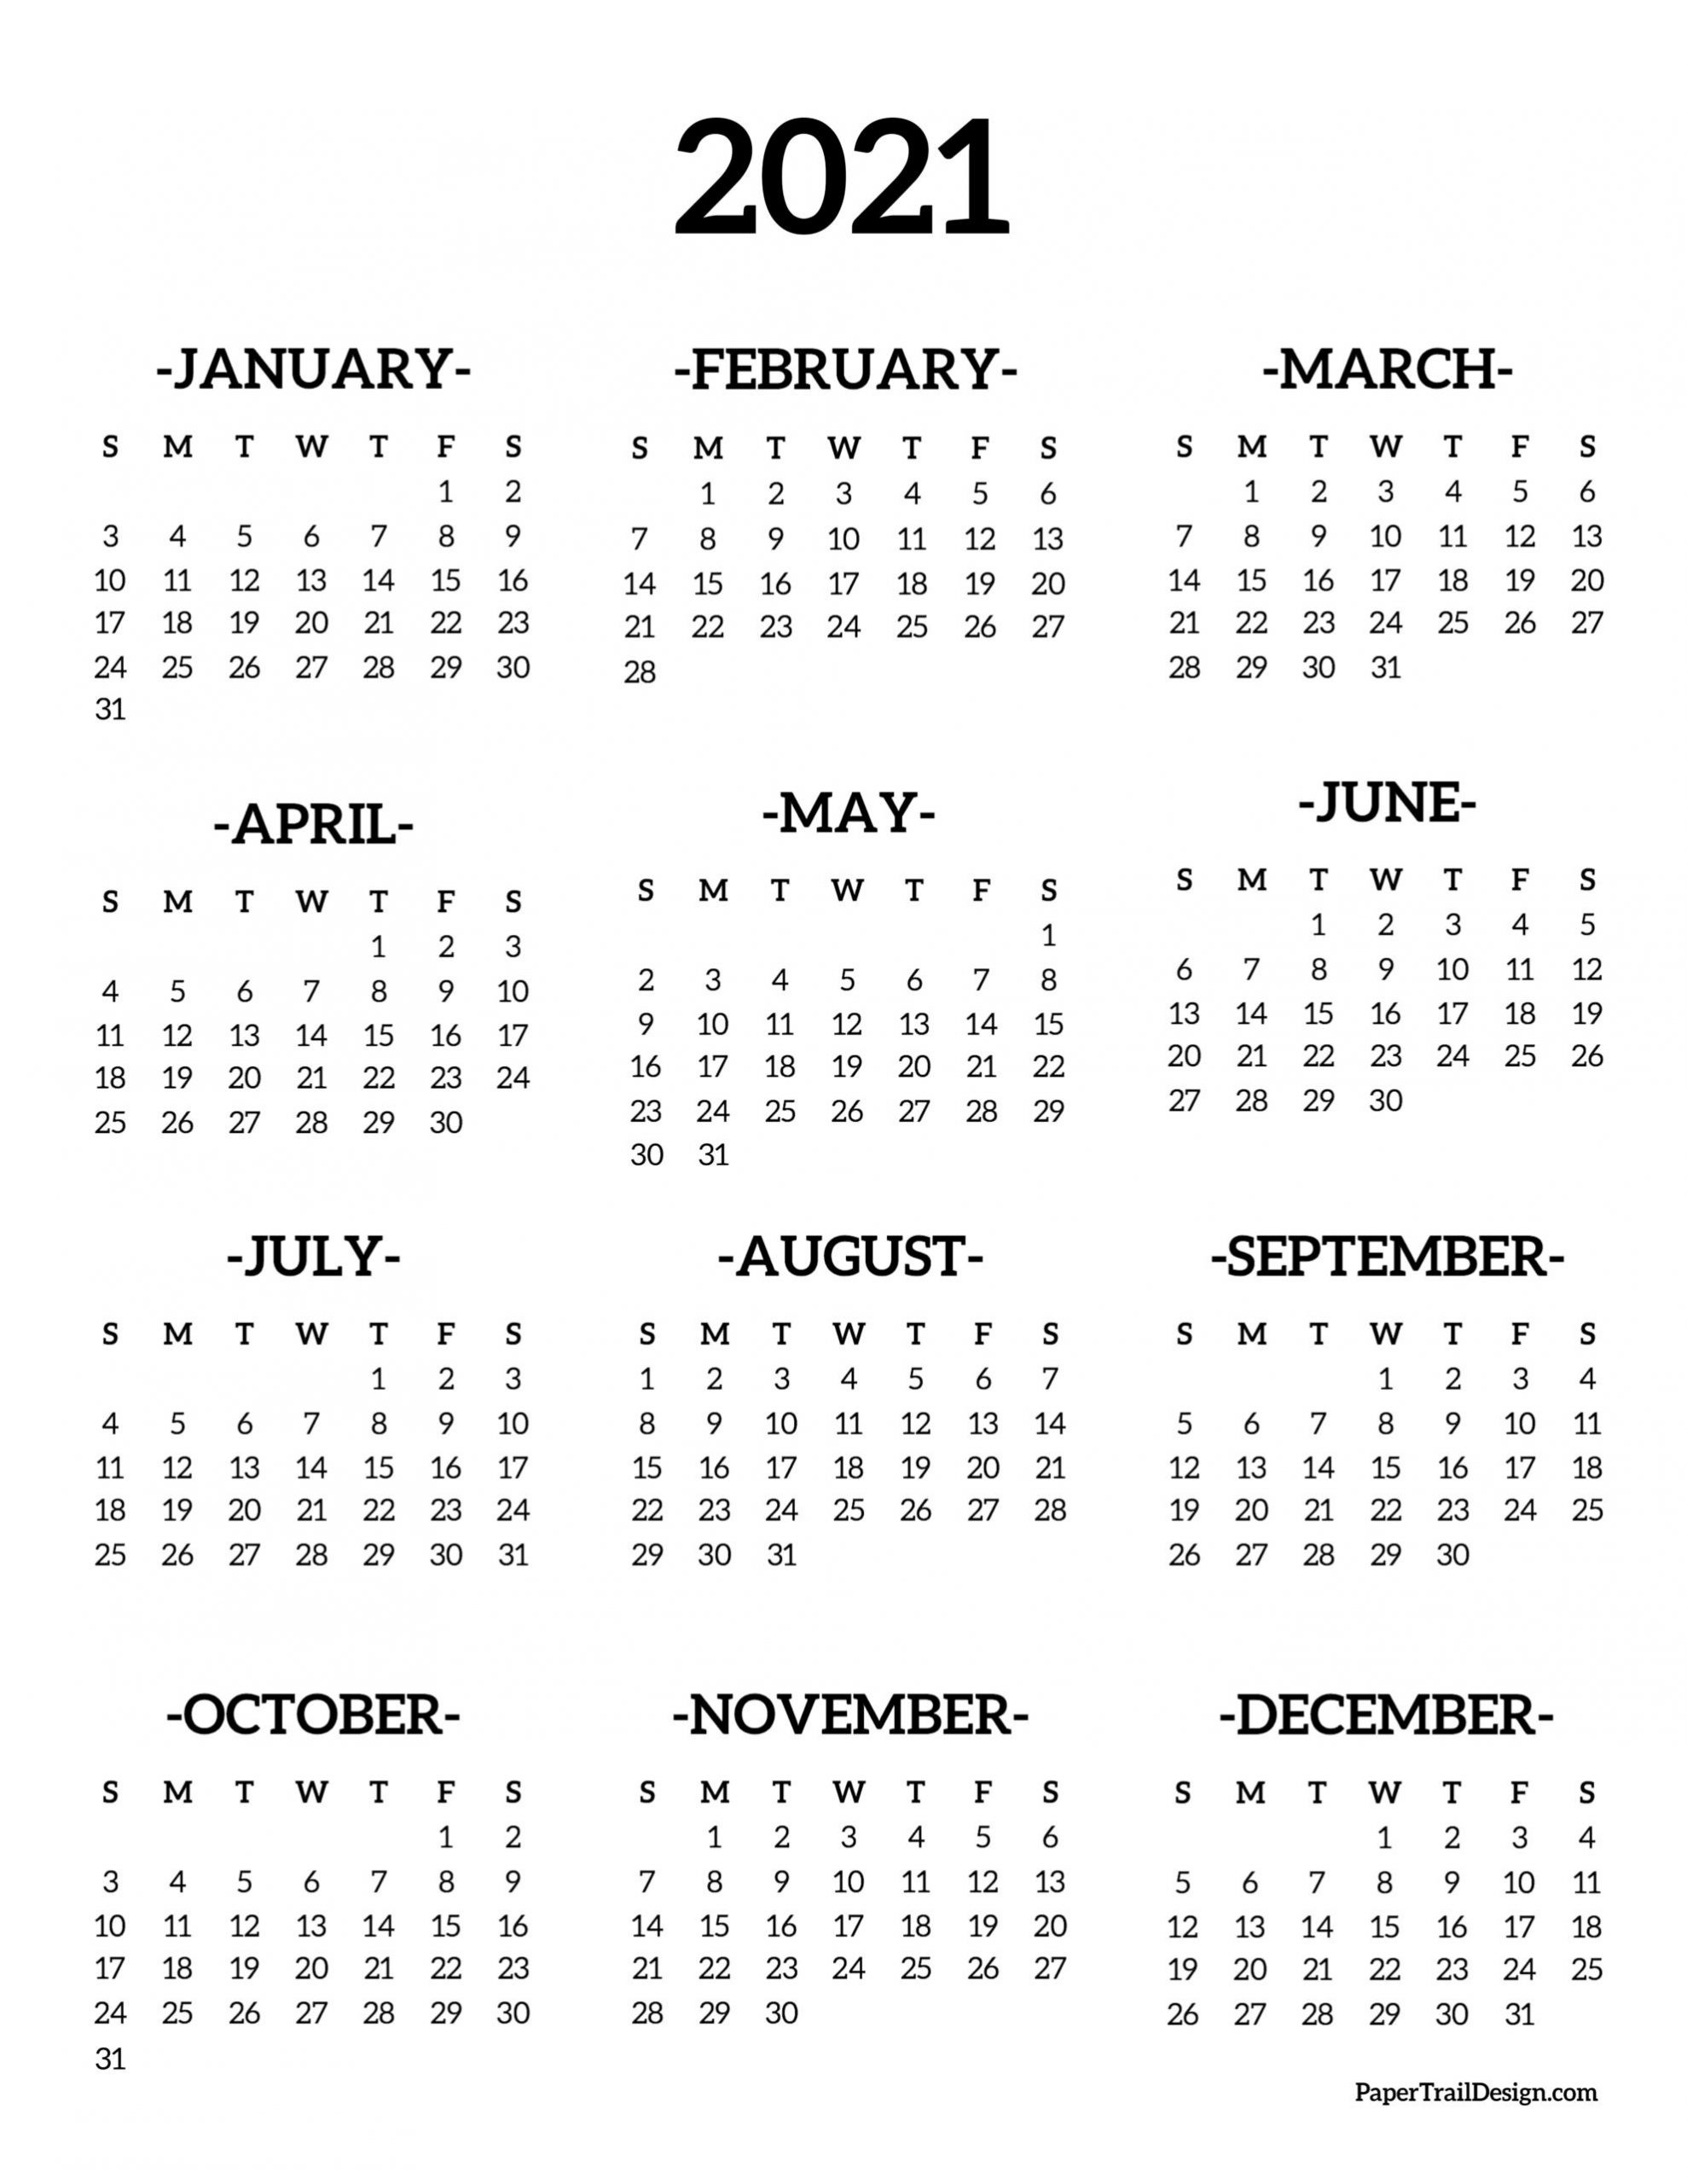 Calendar 2021 Printable One Page | Paper Trail Design  Printable 2021 Calendar One Sheet